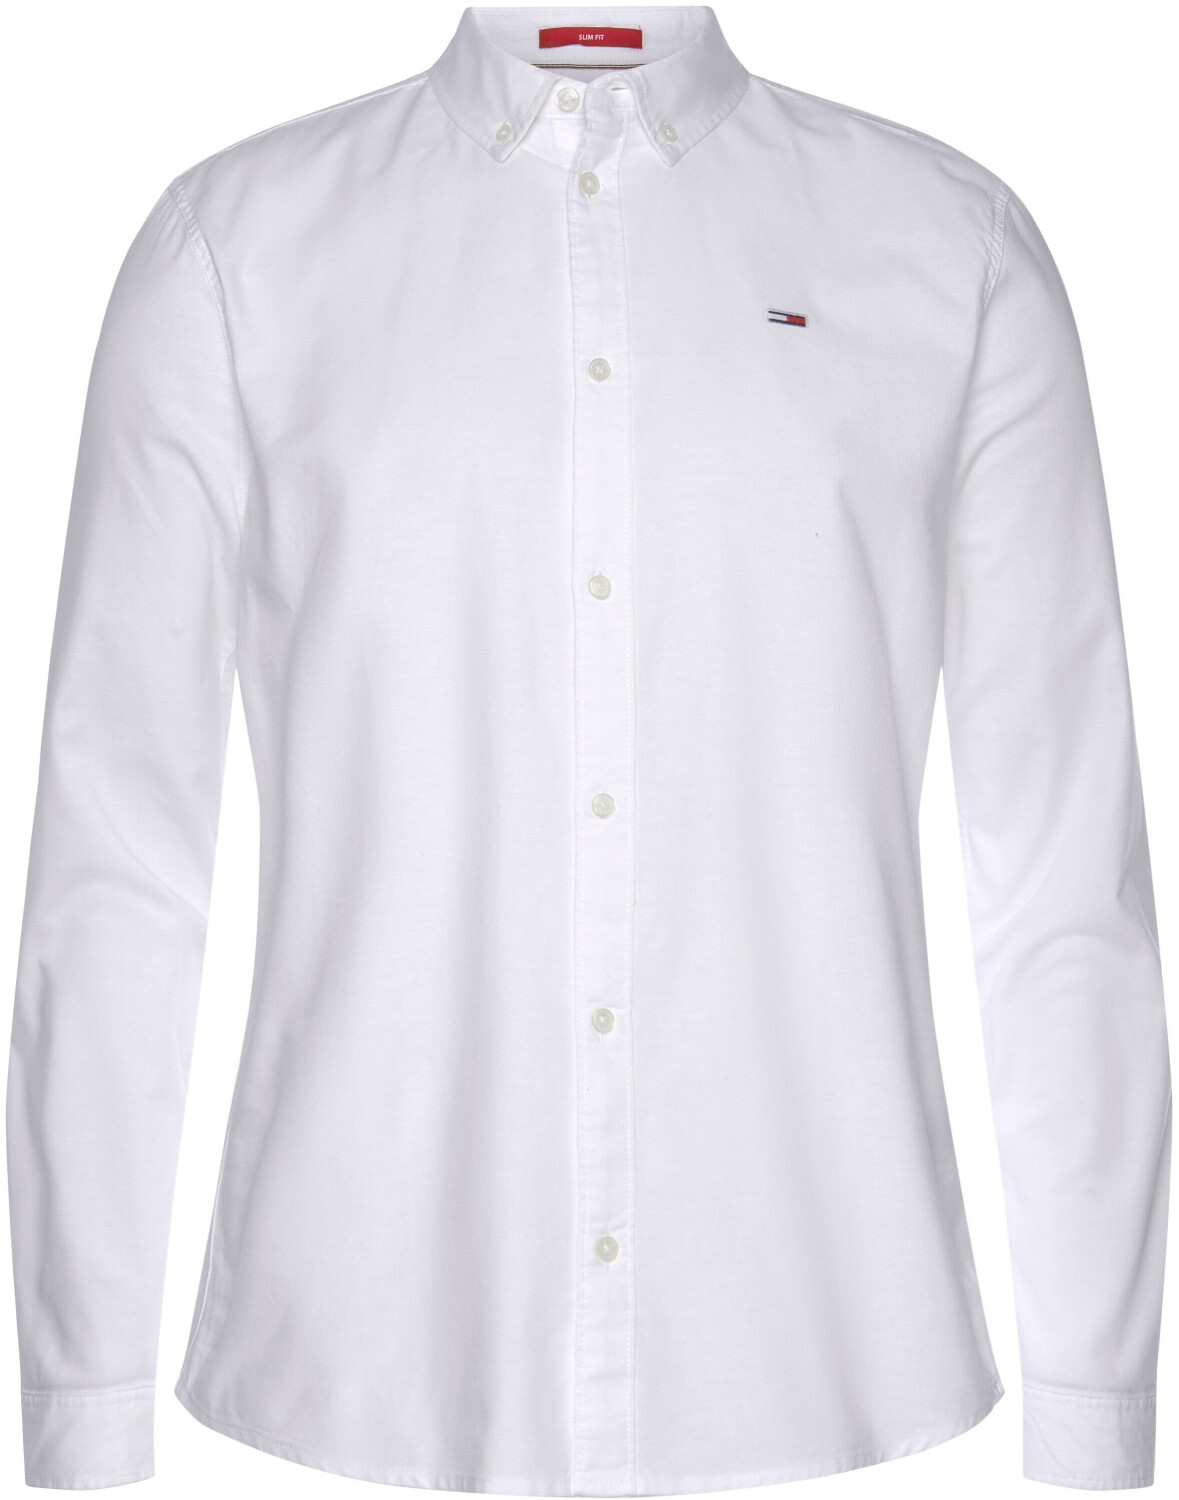 Tommy Hilfiger TJM Stretch Oxford Shirt (DM0DM09594) ab € 46,99 |  Preisvergleich bei